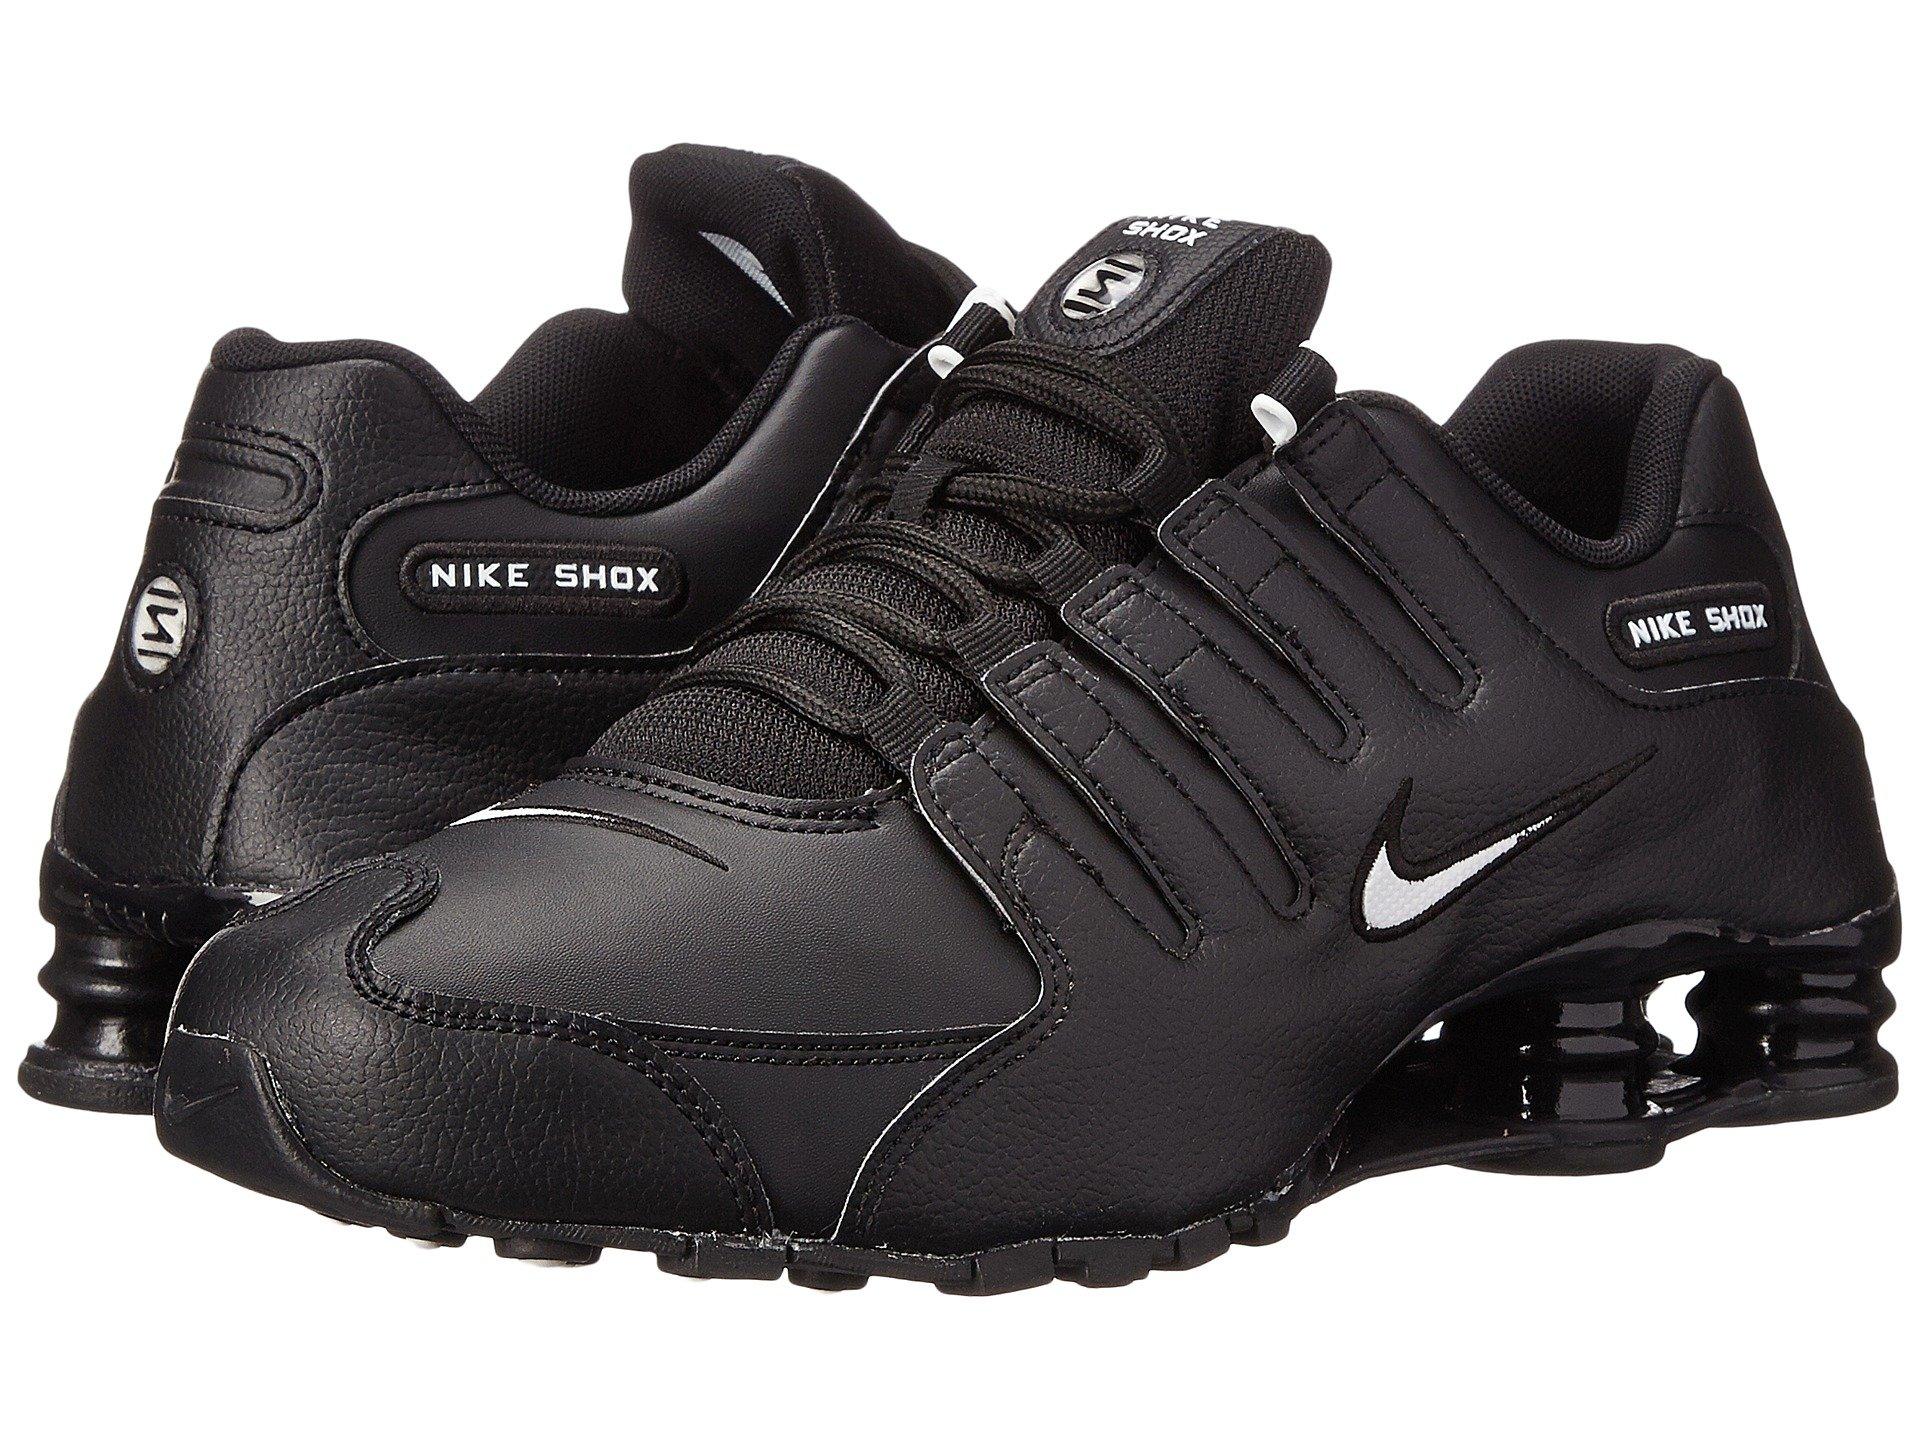 Nike Synthetic Shox Nz Eu in Black/White/Black (Black) for Men Lyst